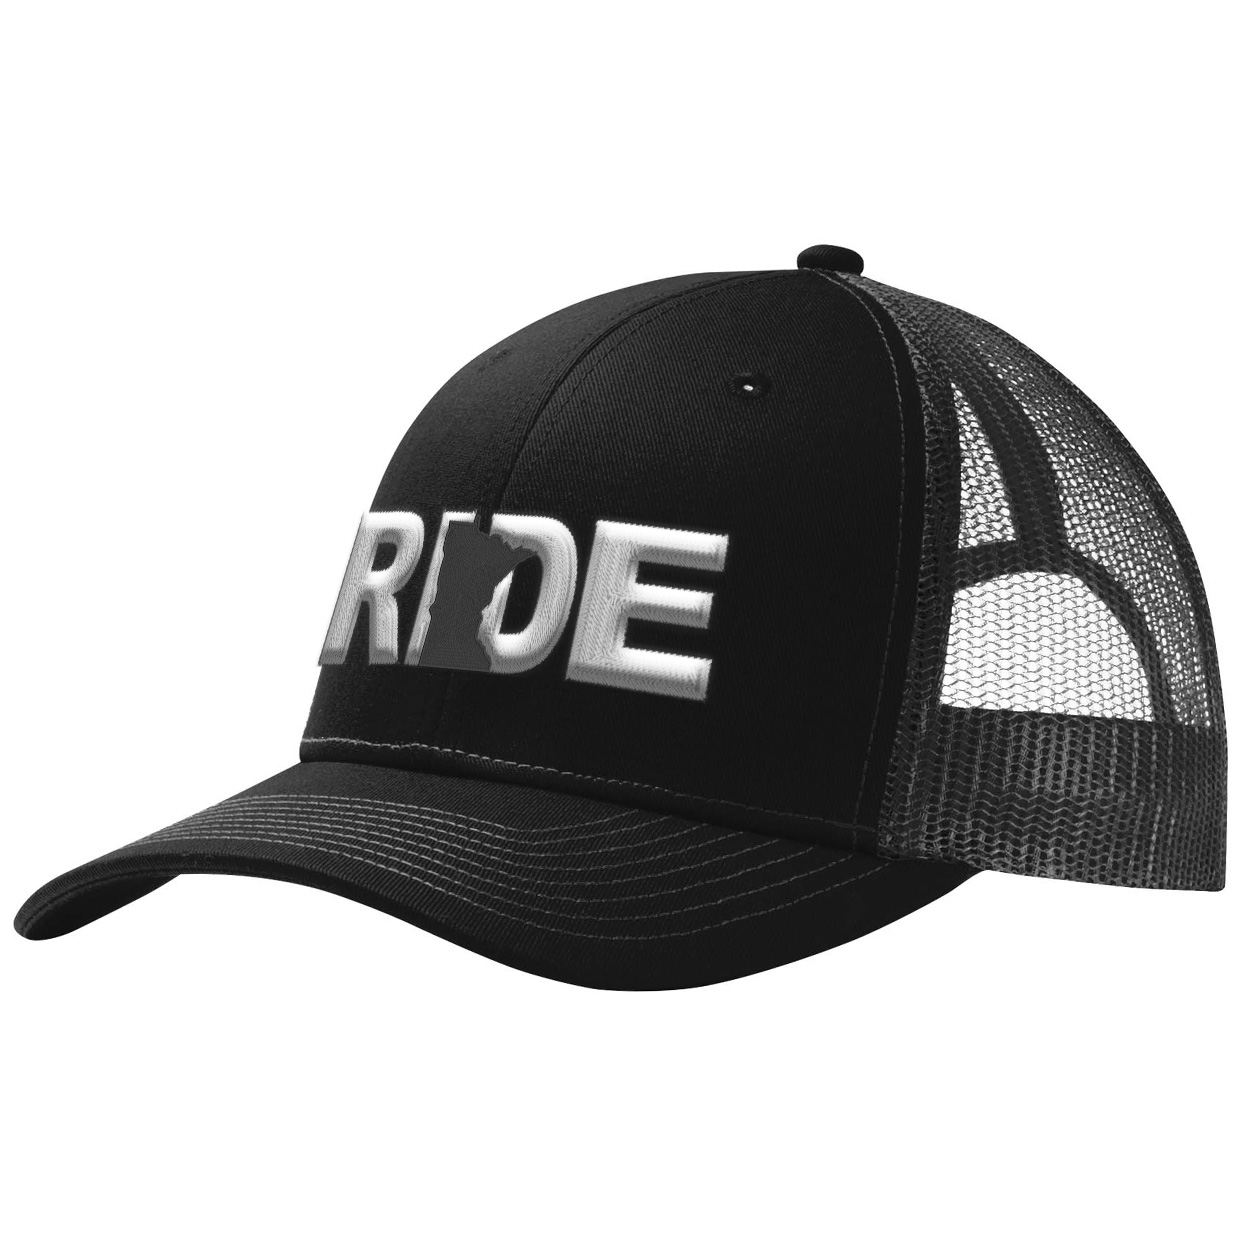 Ride Minnesota Classic Pro 3D Puff Embroidered Snapback Trucker Hat Black/Gray